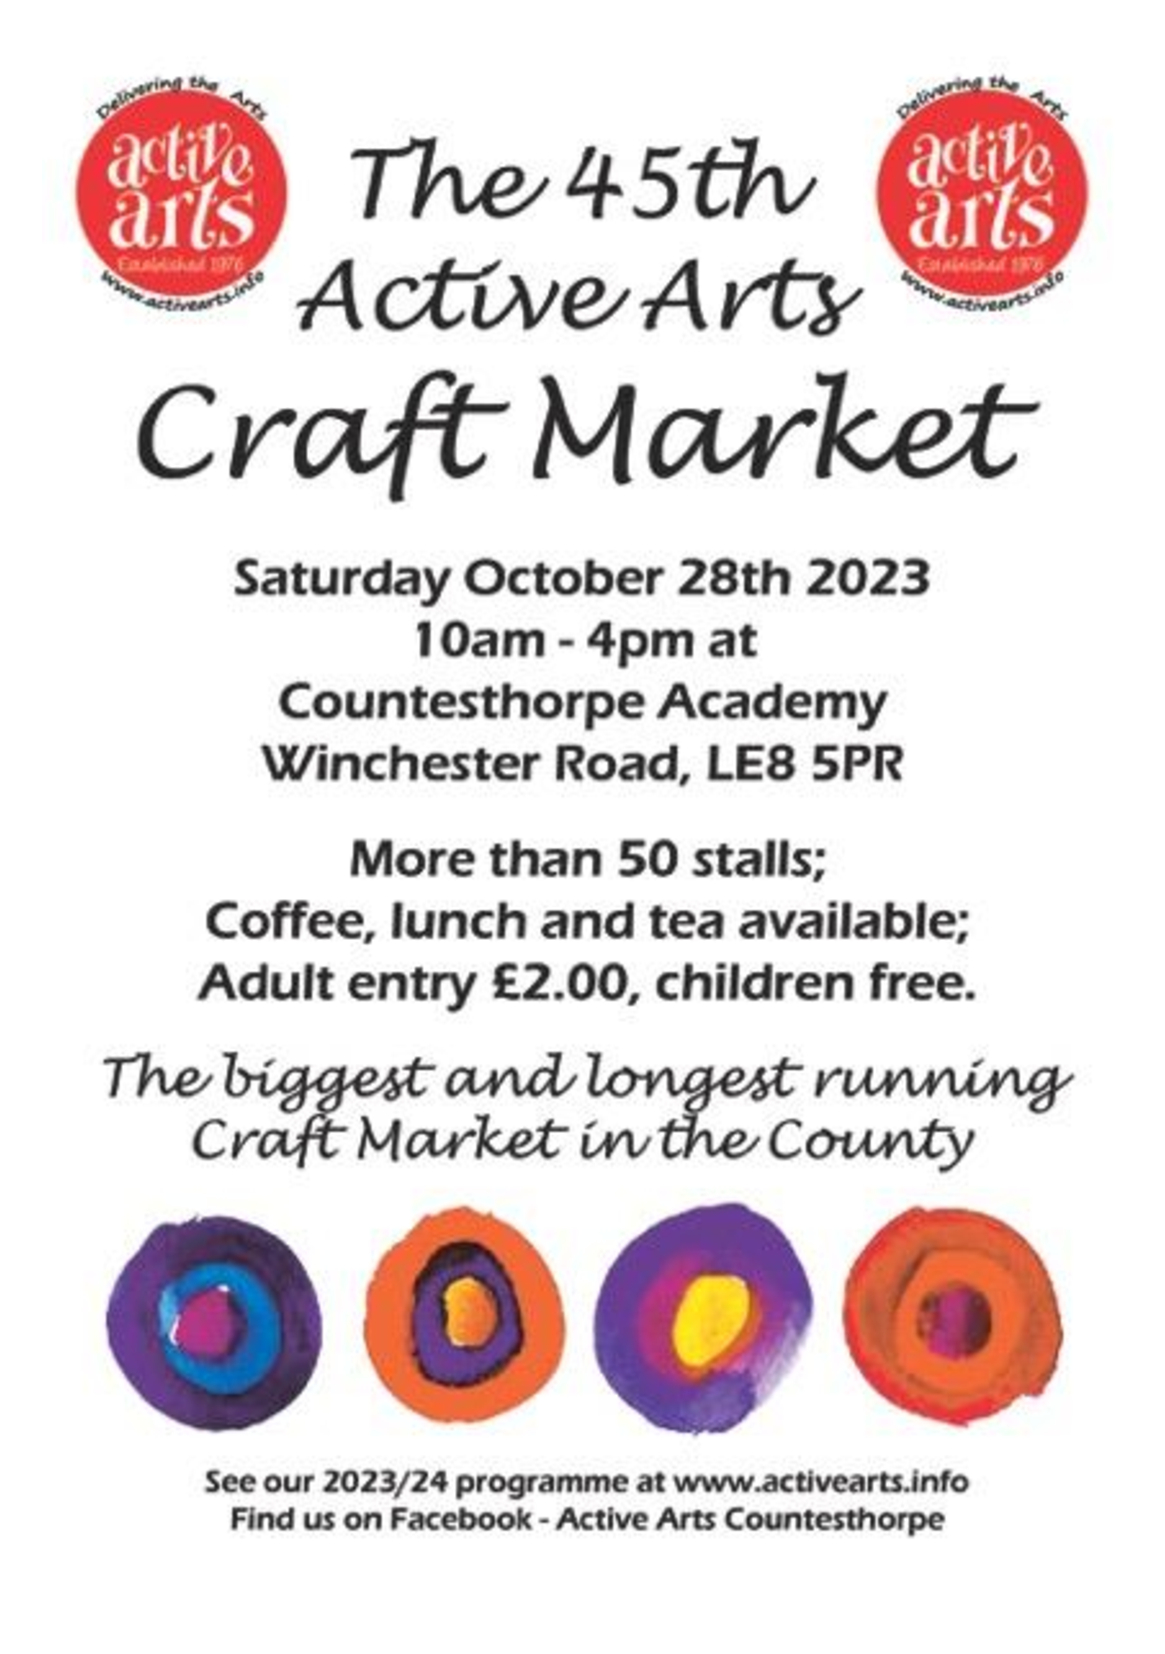 The 45th Active Arts Craft Market